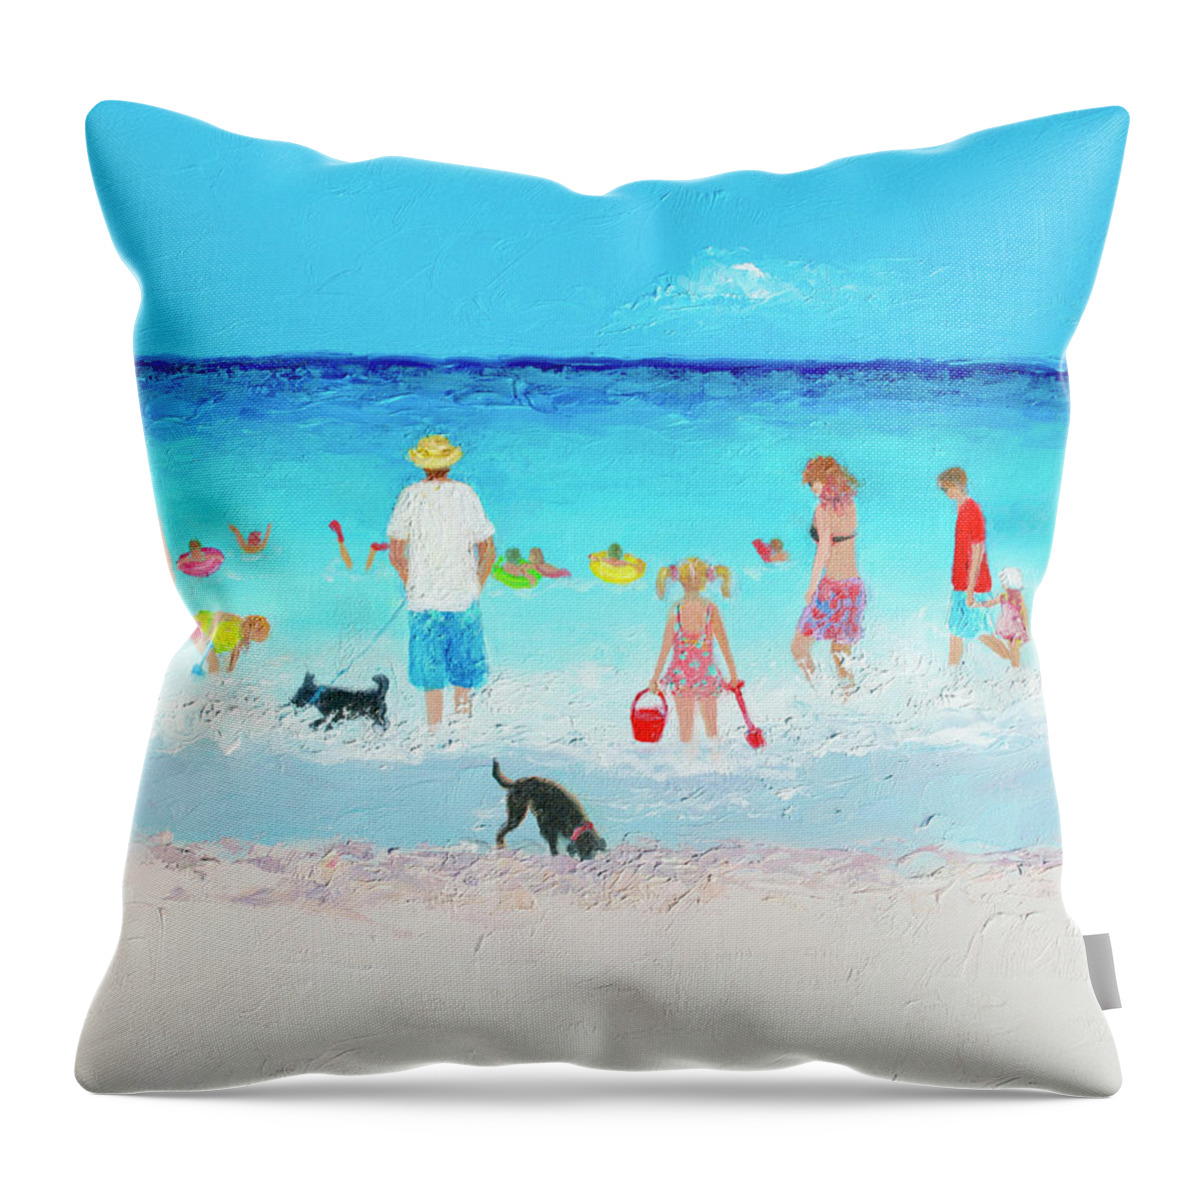 Beach Throw Pillow featuring the painting The Beach Parade, beach scene by Jan Matson